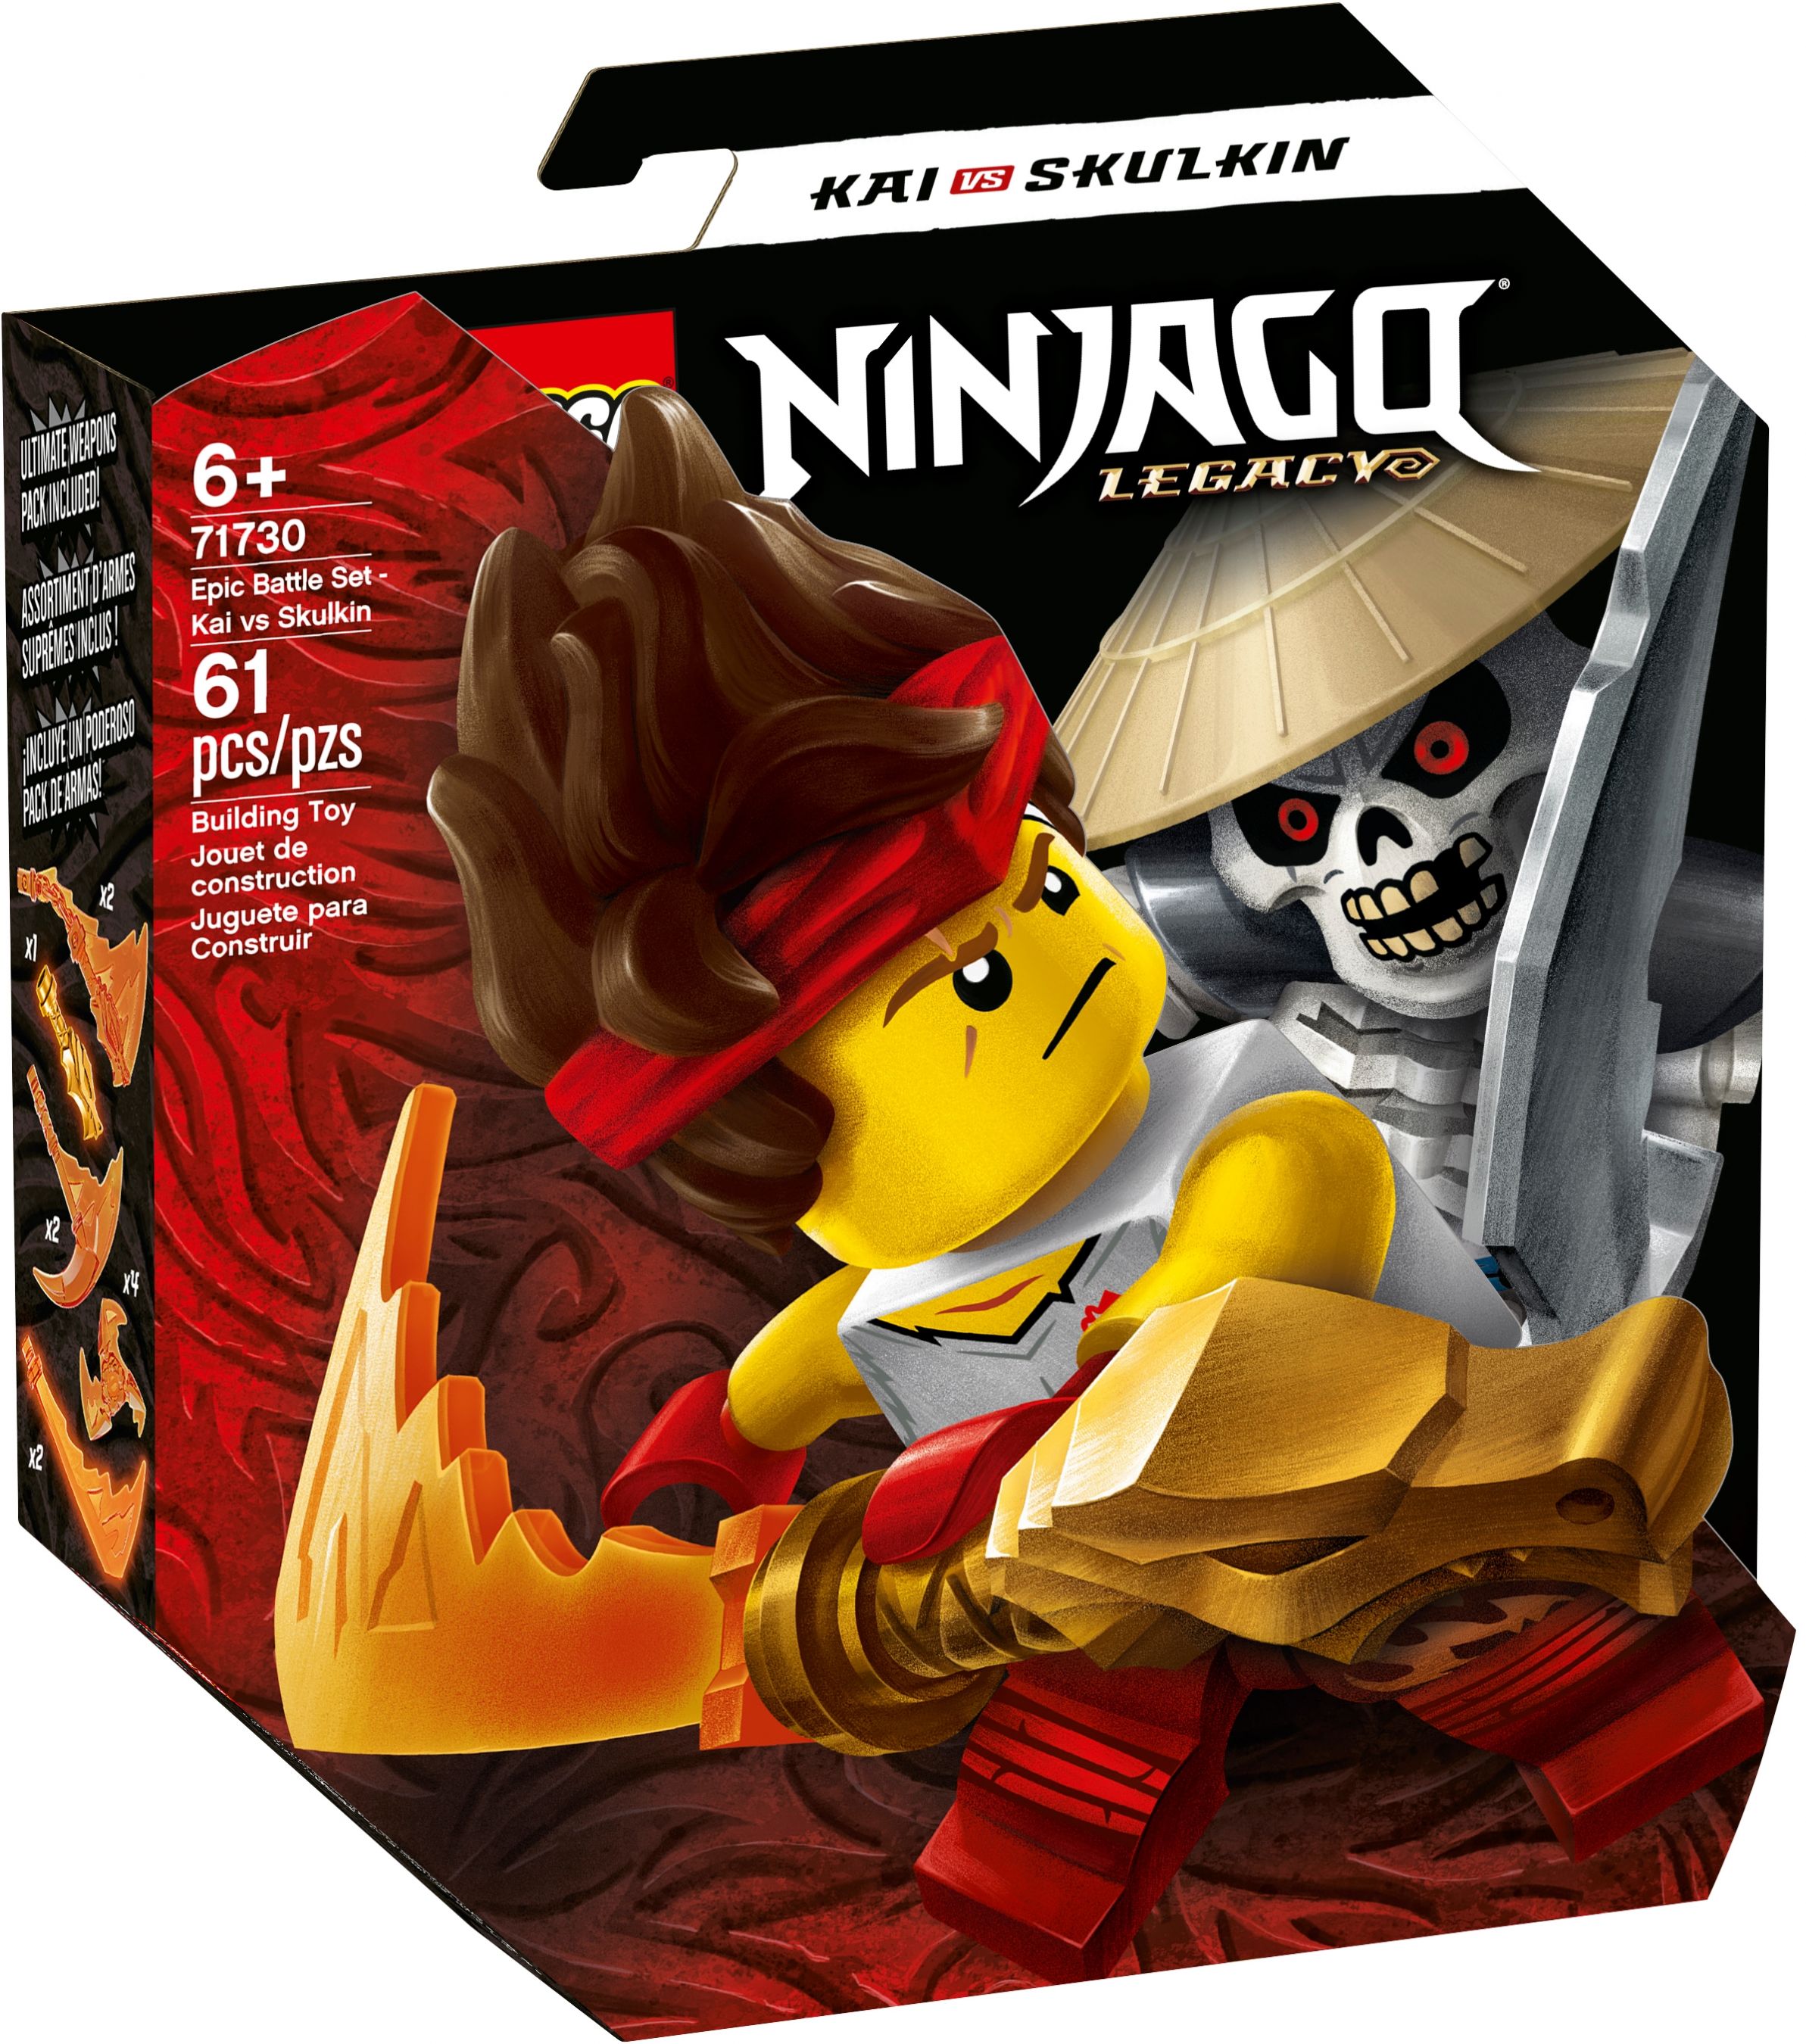 LEGO Ninjago 71730 Battle Set: Kai vs. Skulkin LEGO_71730_alt1.jpg